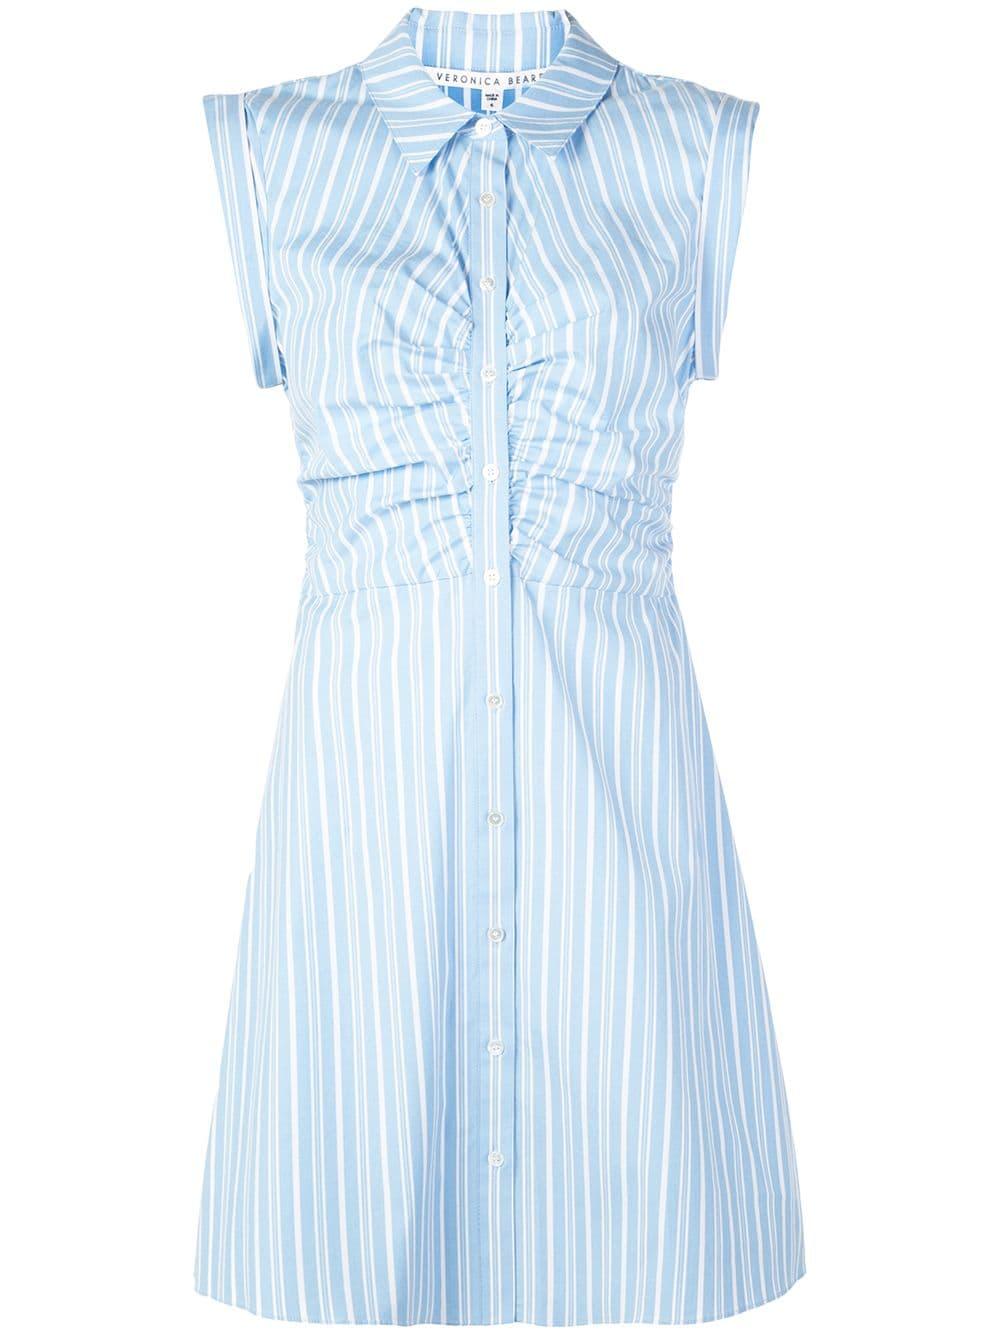 Veronica Beard Synthetic Striped Shirt Dress in Blue - Lyst